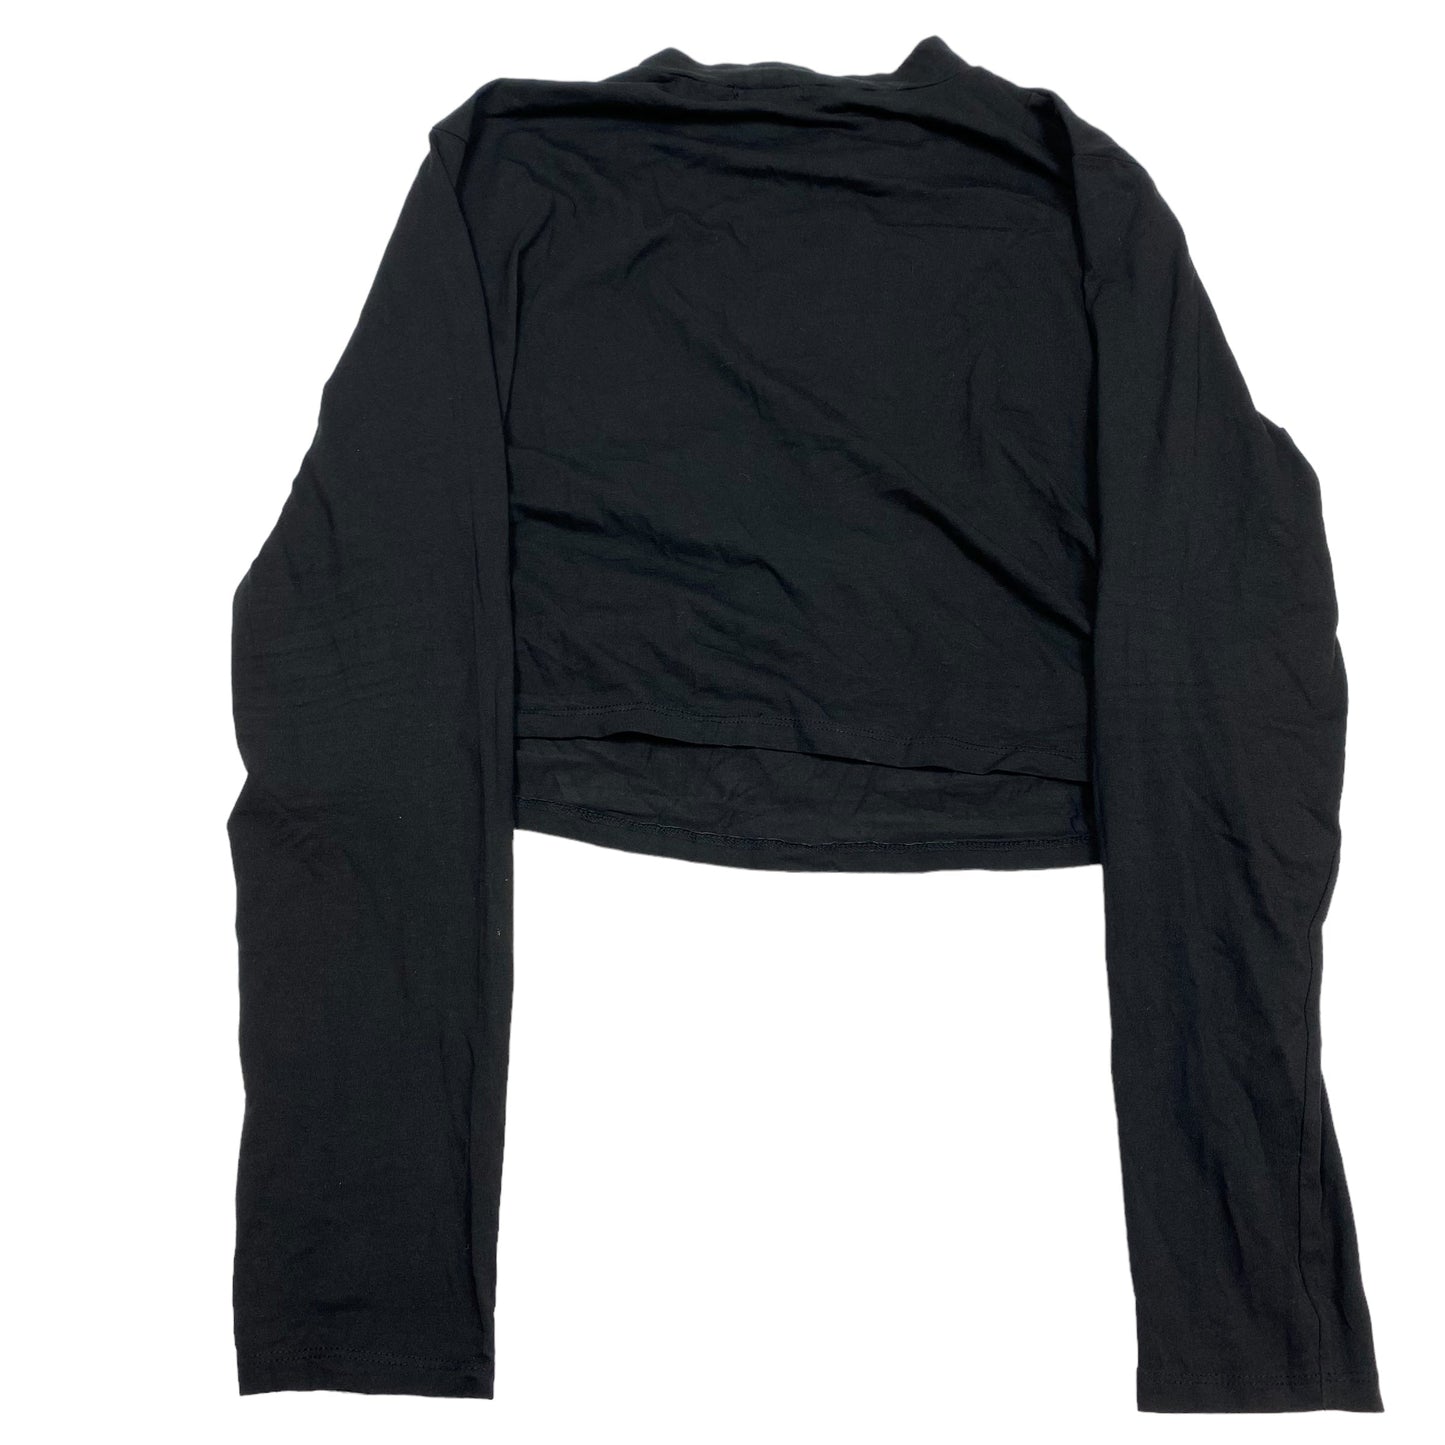 Black Top Long Sleeve Fashion Nova, Size 3x